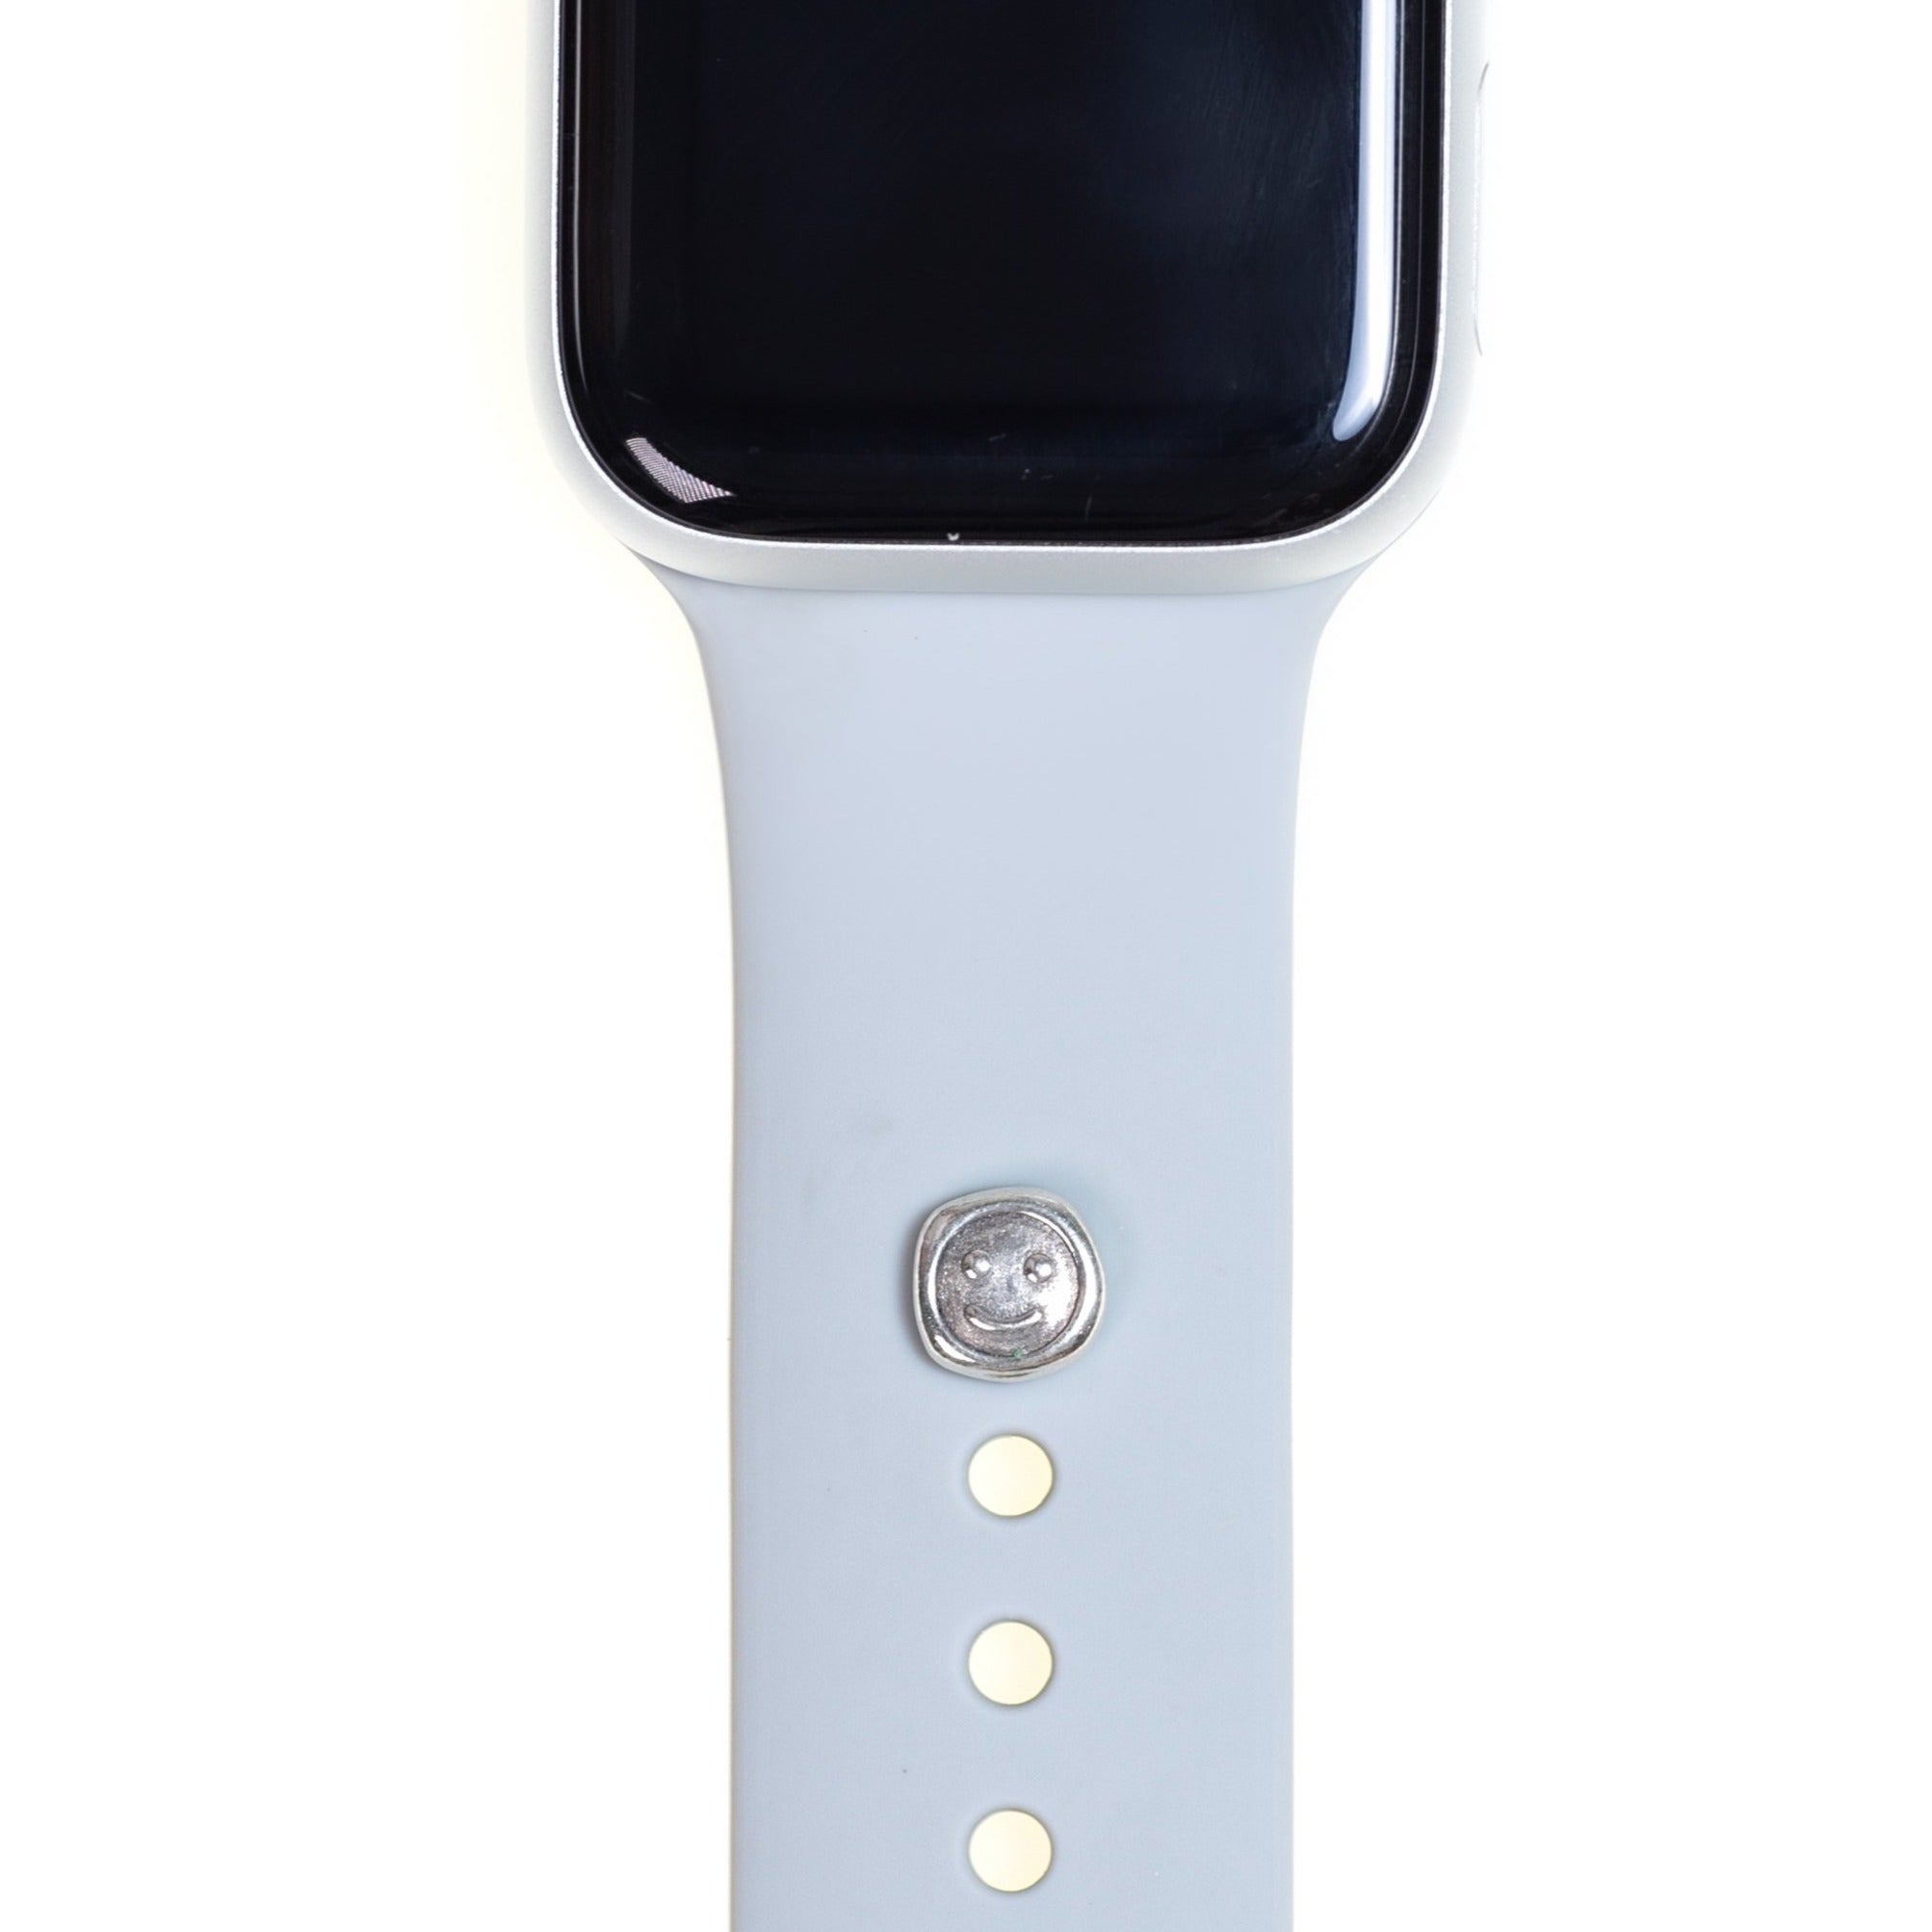 Emoji Cuff • Apple Watch Band's Charm